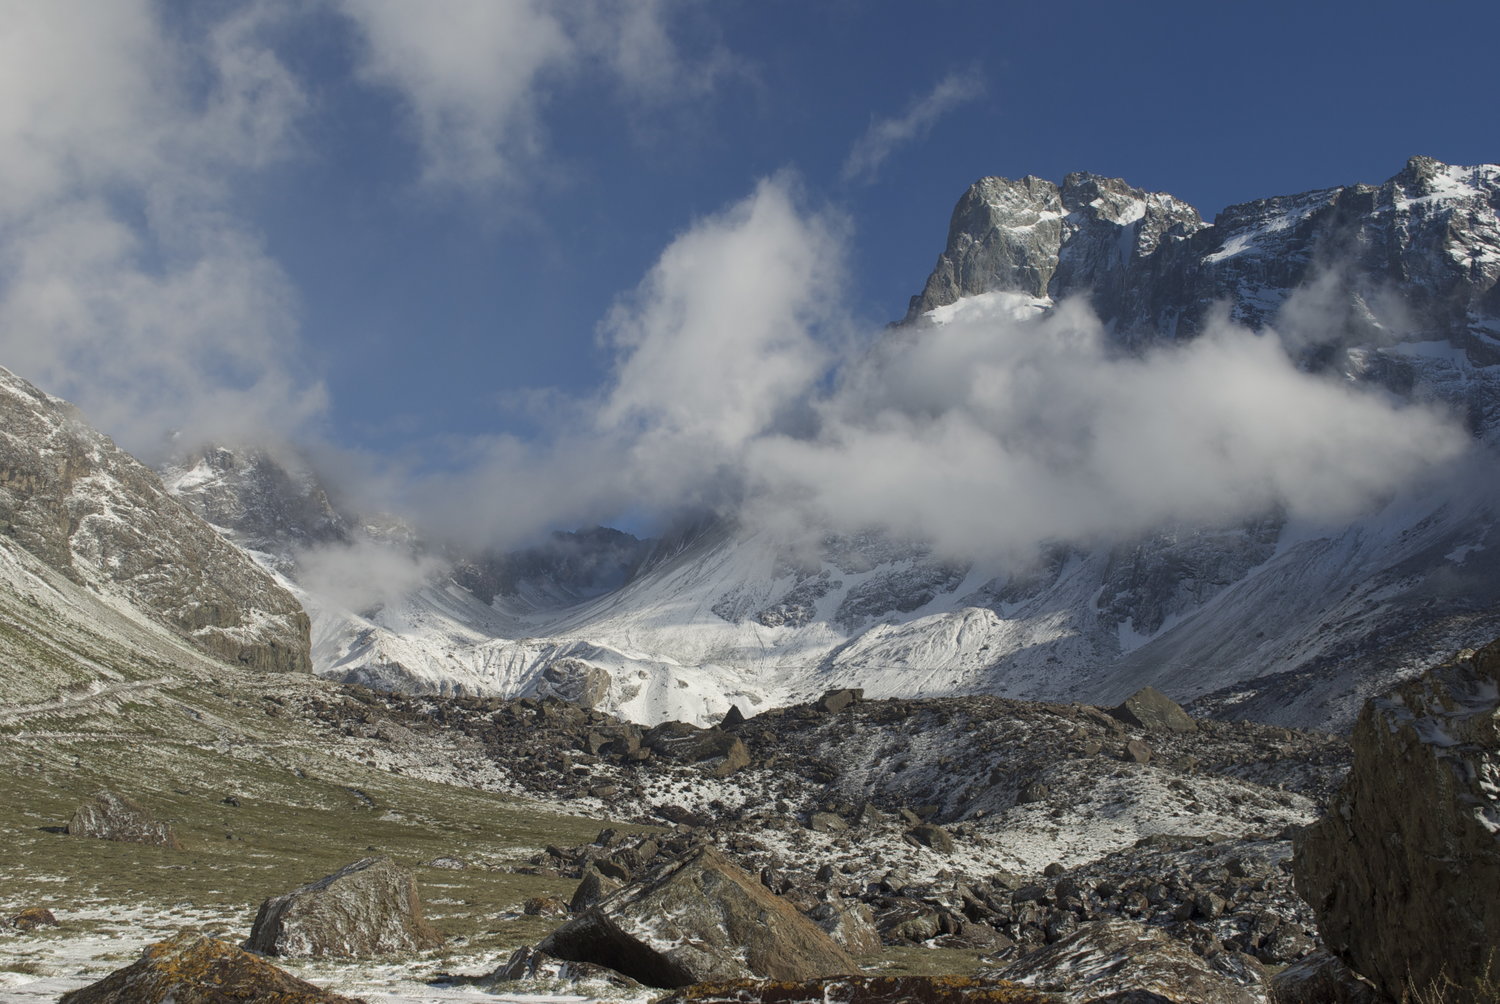 Maipo Valley Trekking Experience tour near Santiago de Chile with Chile Montaña_16.jpg